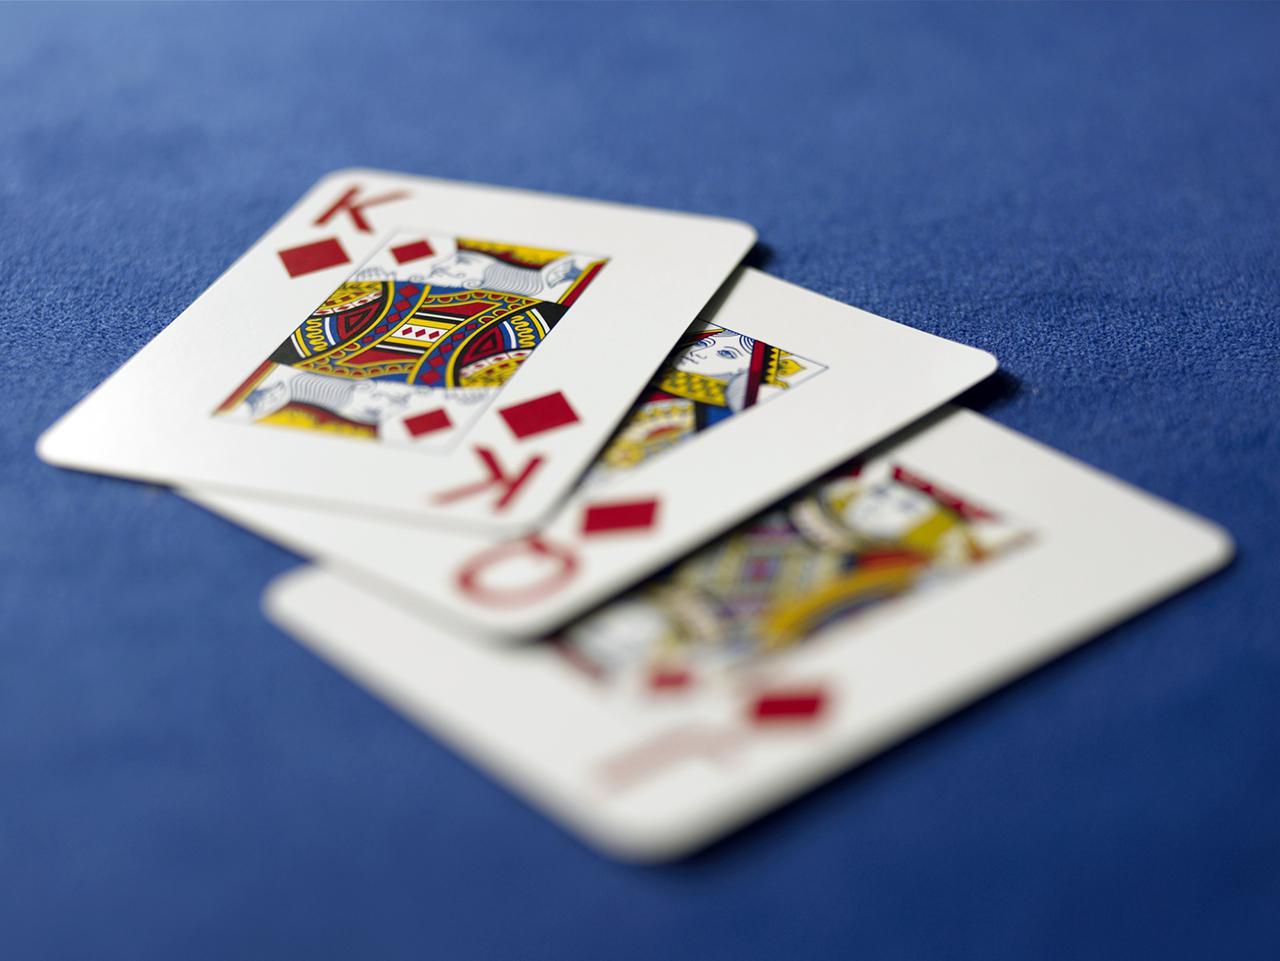 Seca Poker Hand Analyzer